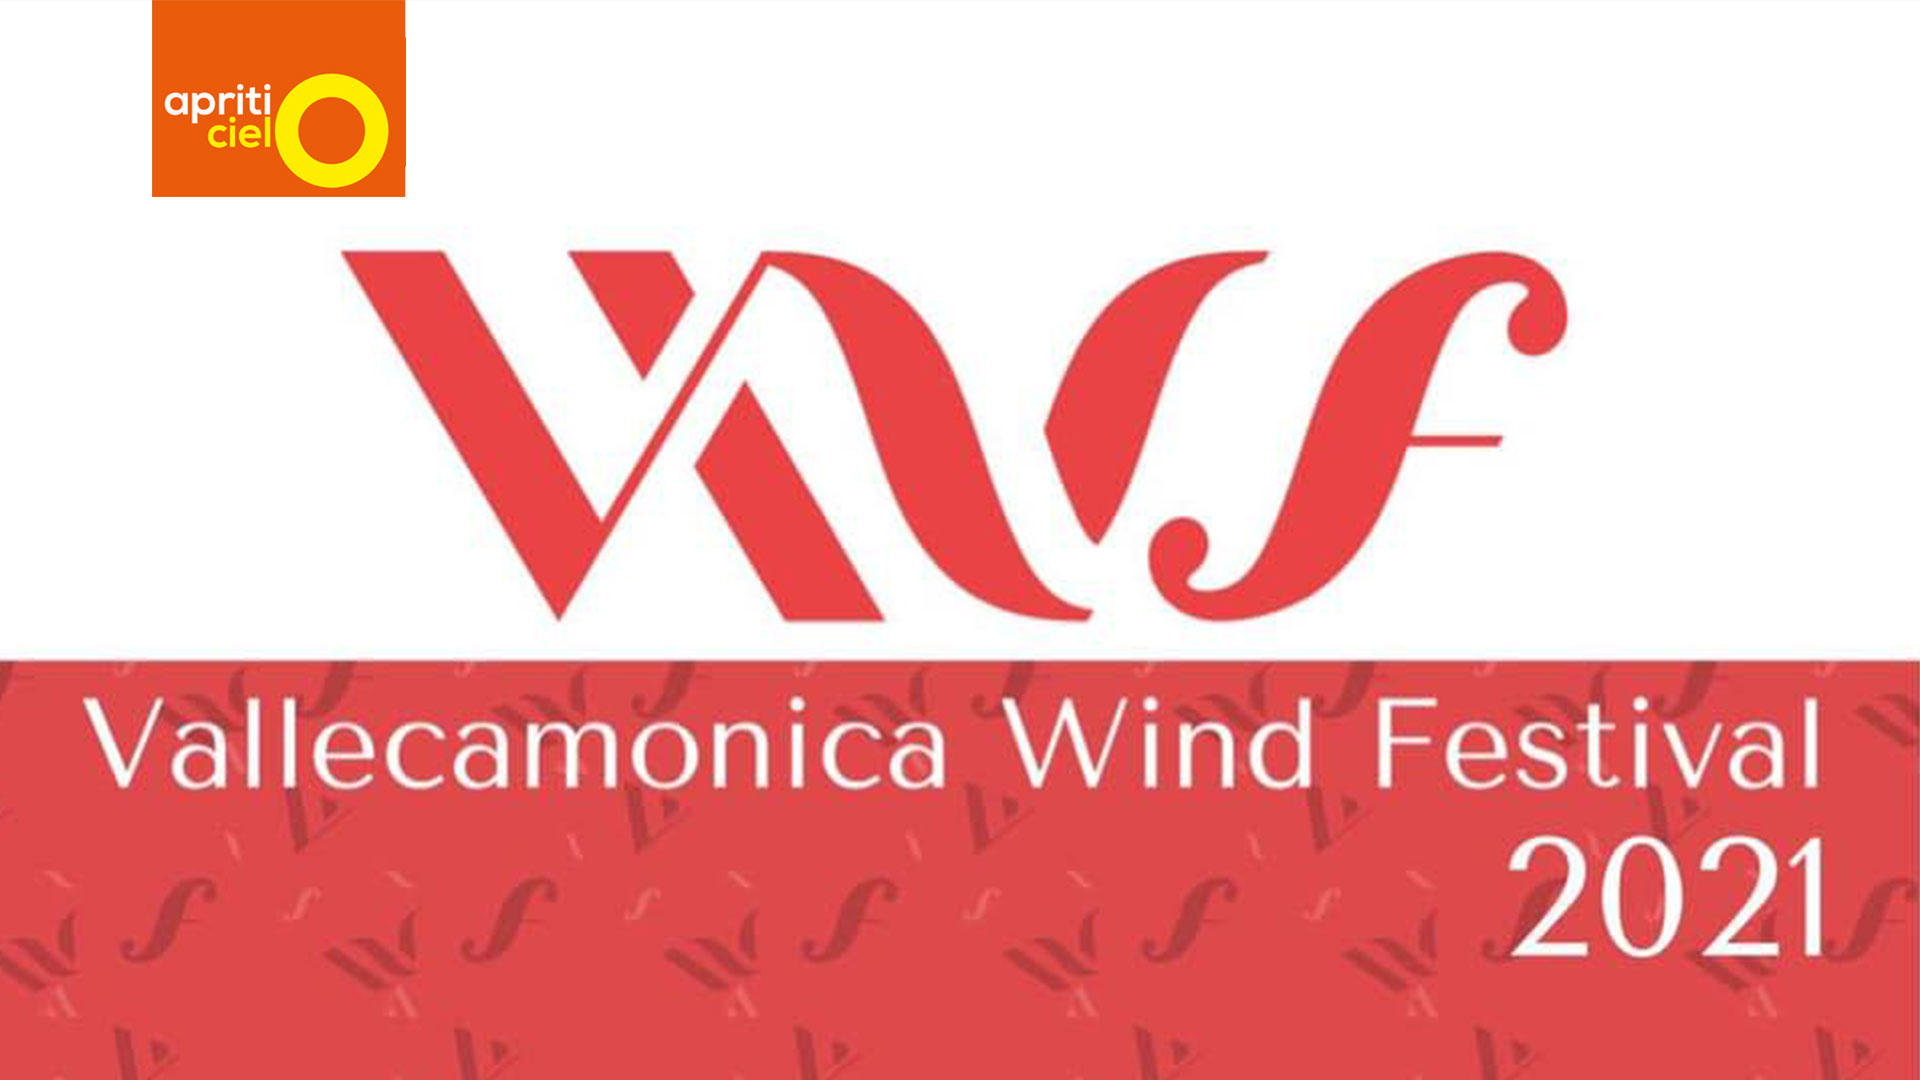 Vallecamonica Wind Festival